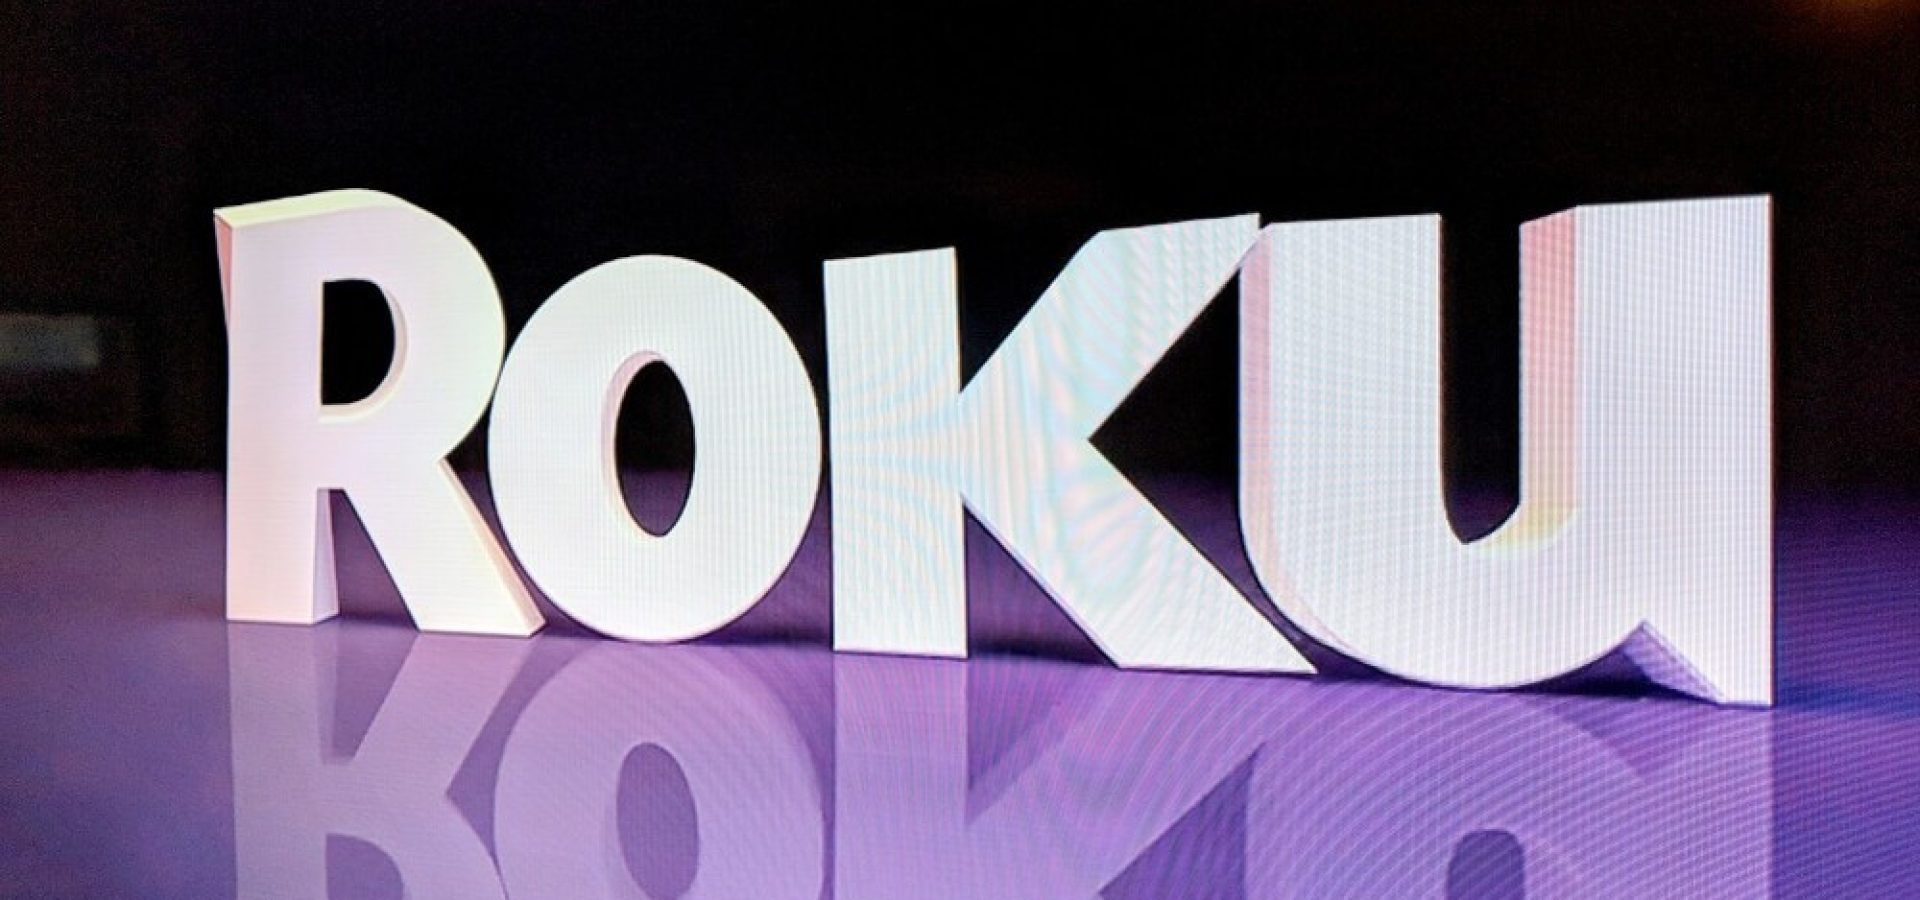 Wibest –roku: Roku’s Logo on TV screen.